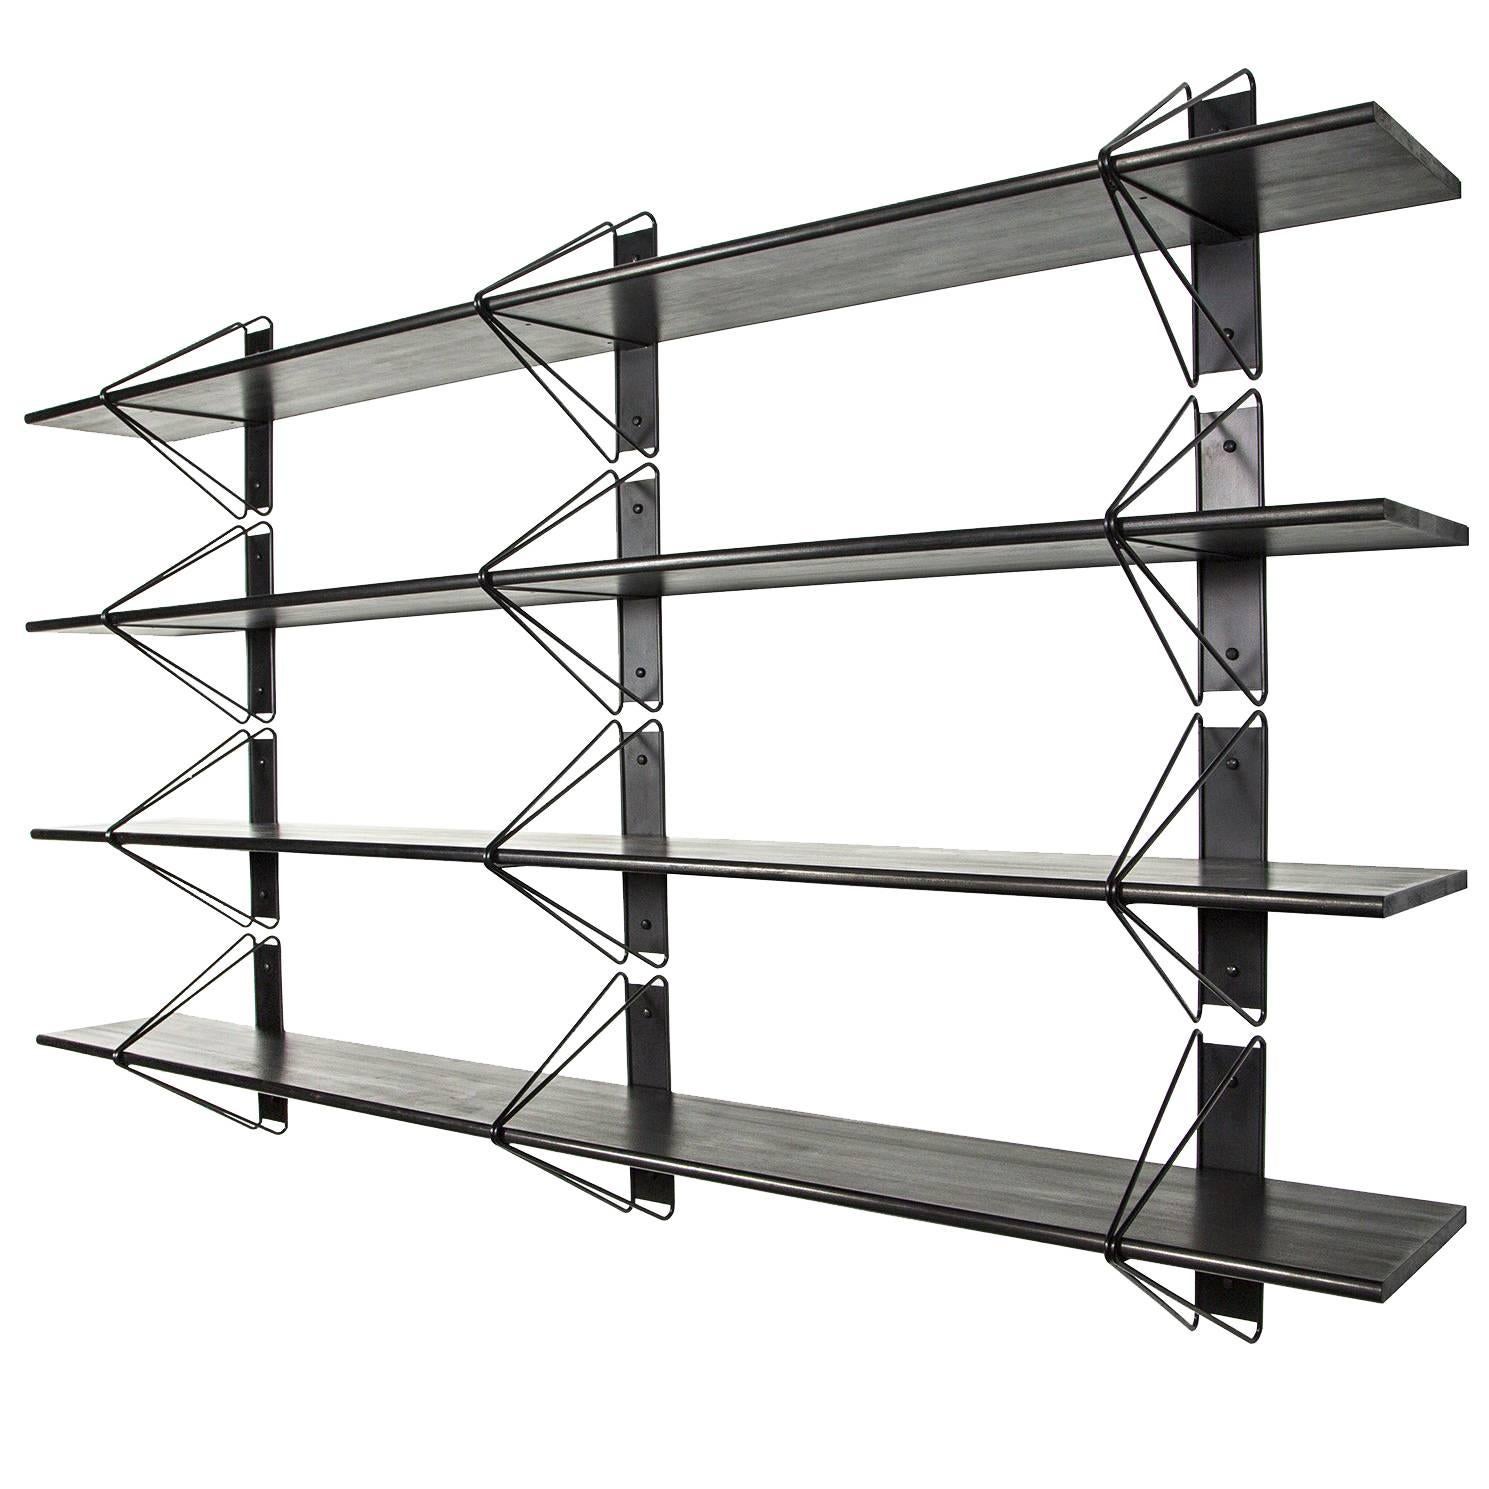 Set of 4 Strut Shelves from Souda, 84in, Black, Made to Order